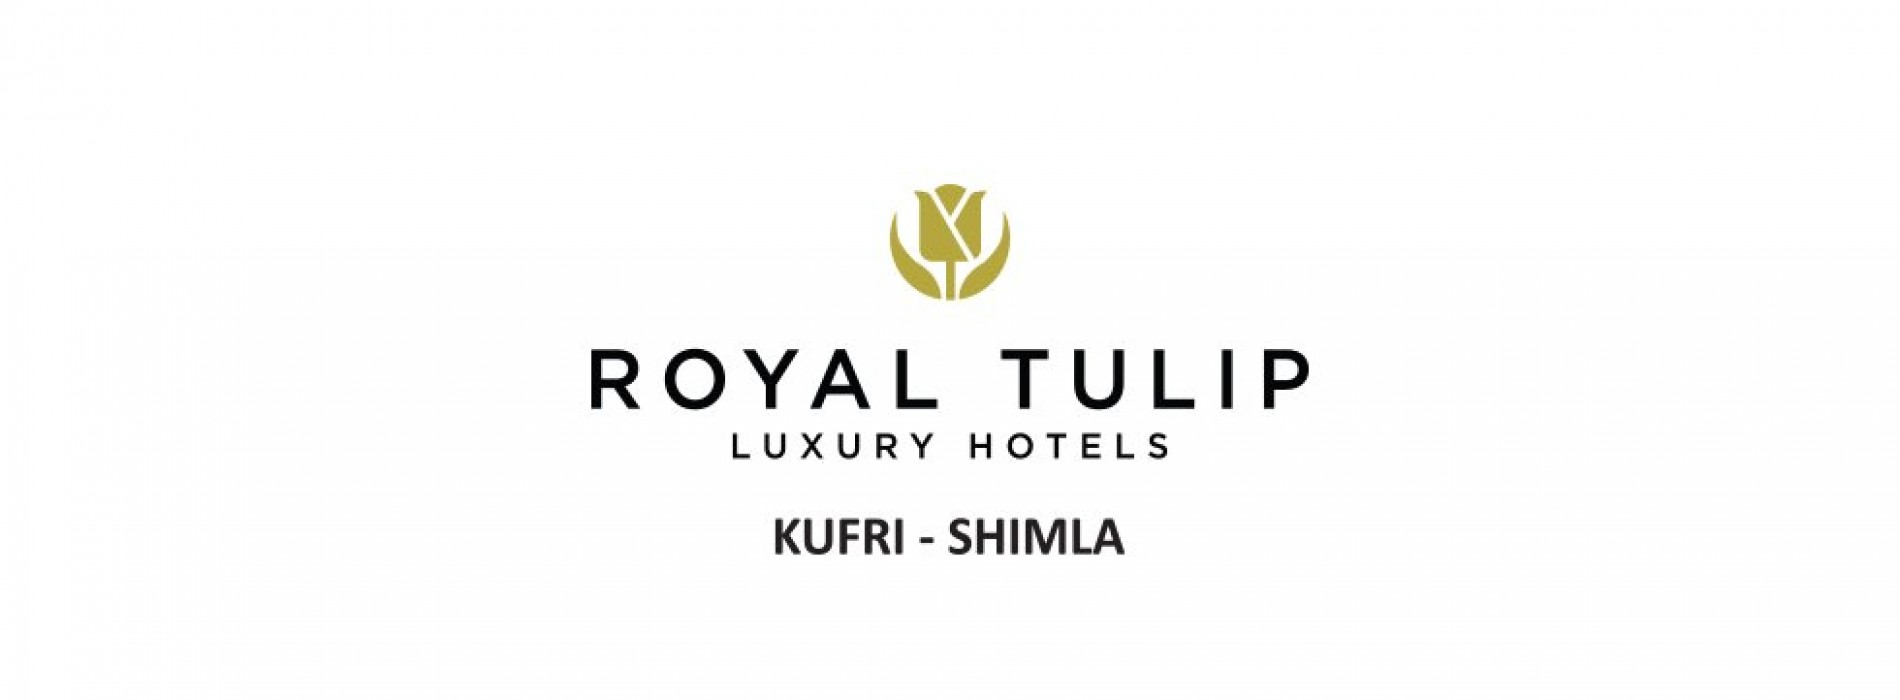 Kufri gets its first International five star hotel with the launch of Royal Tulip Kufri, Shimla